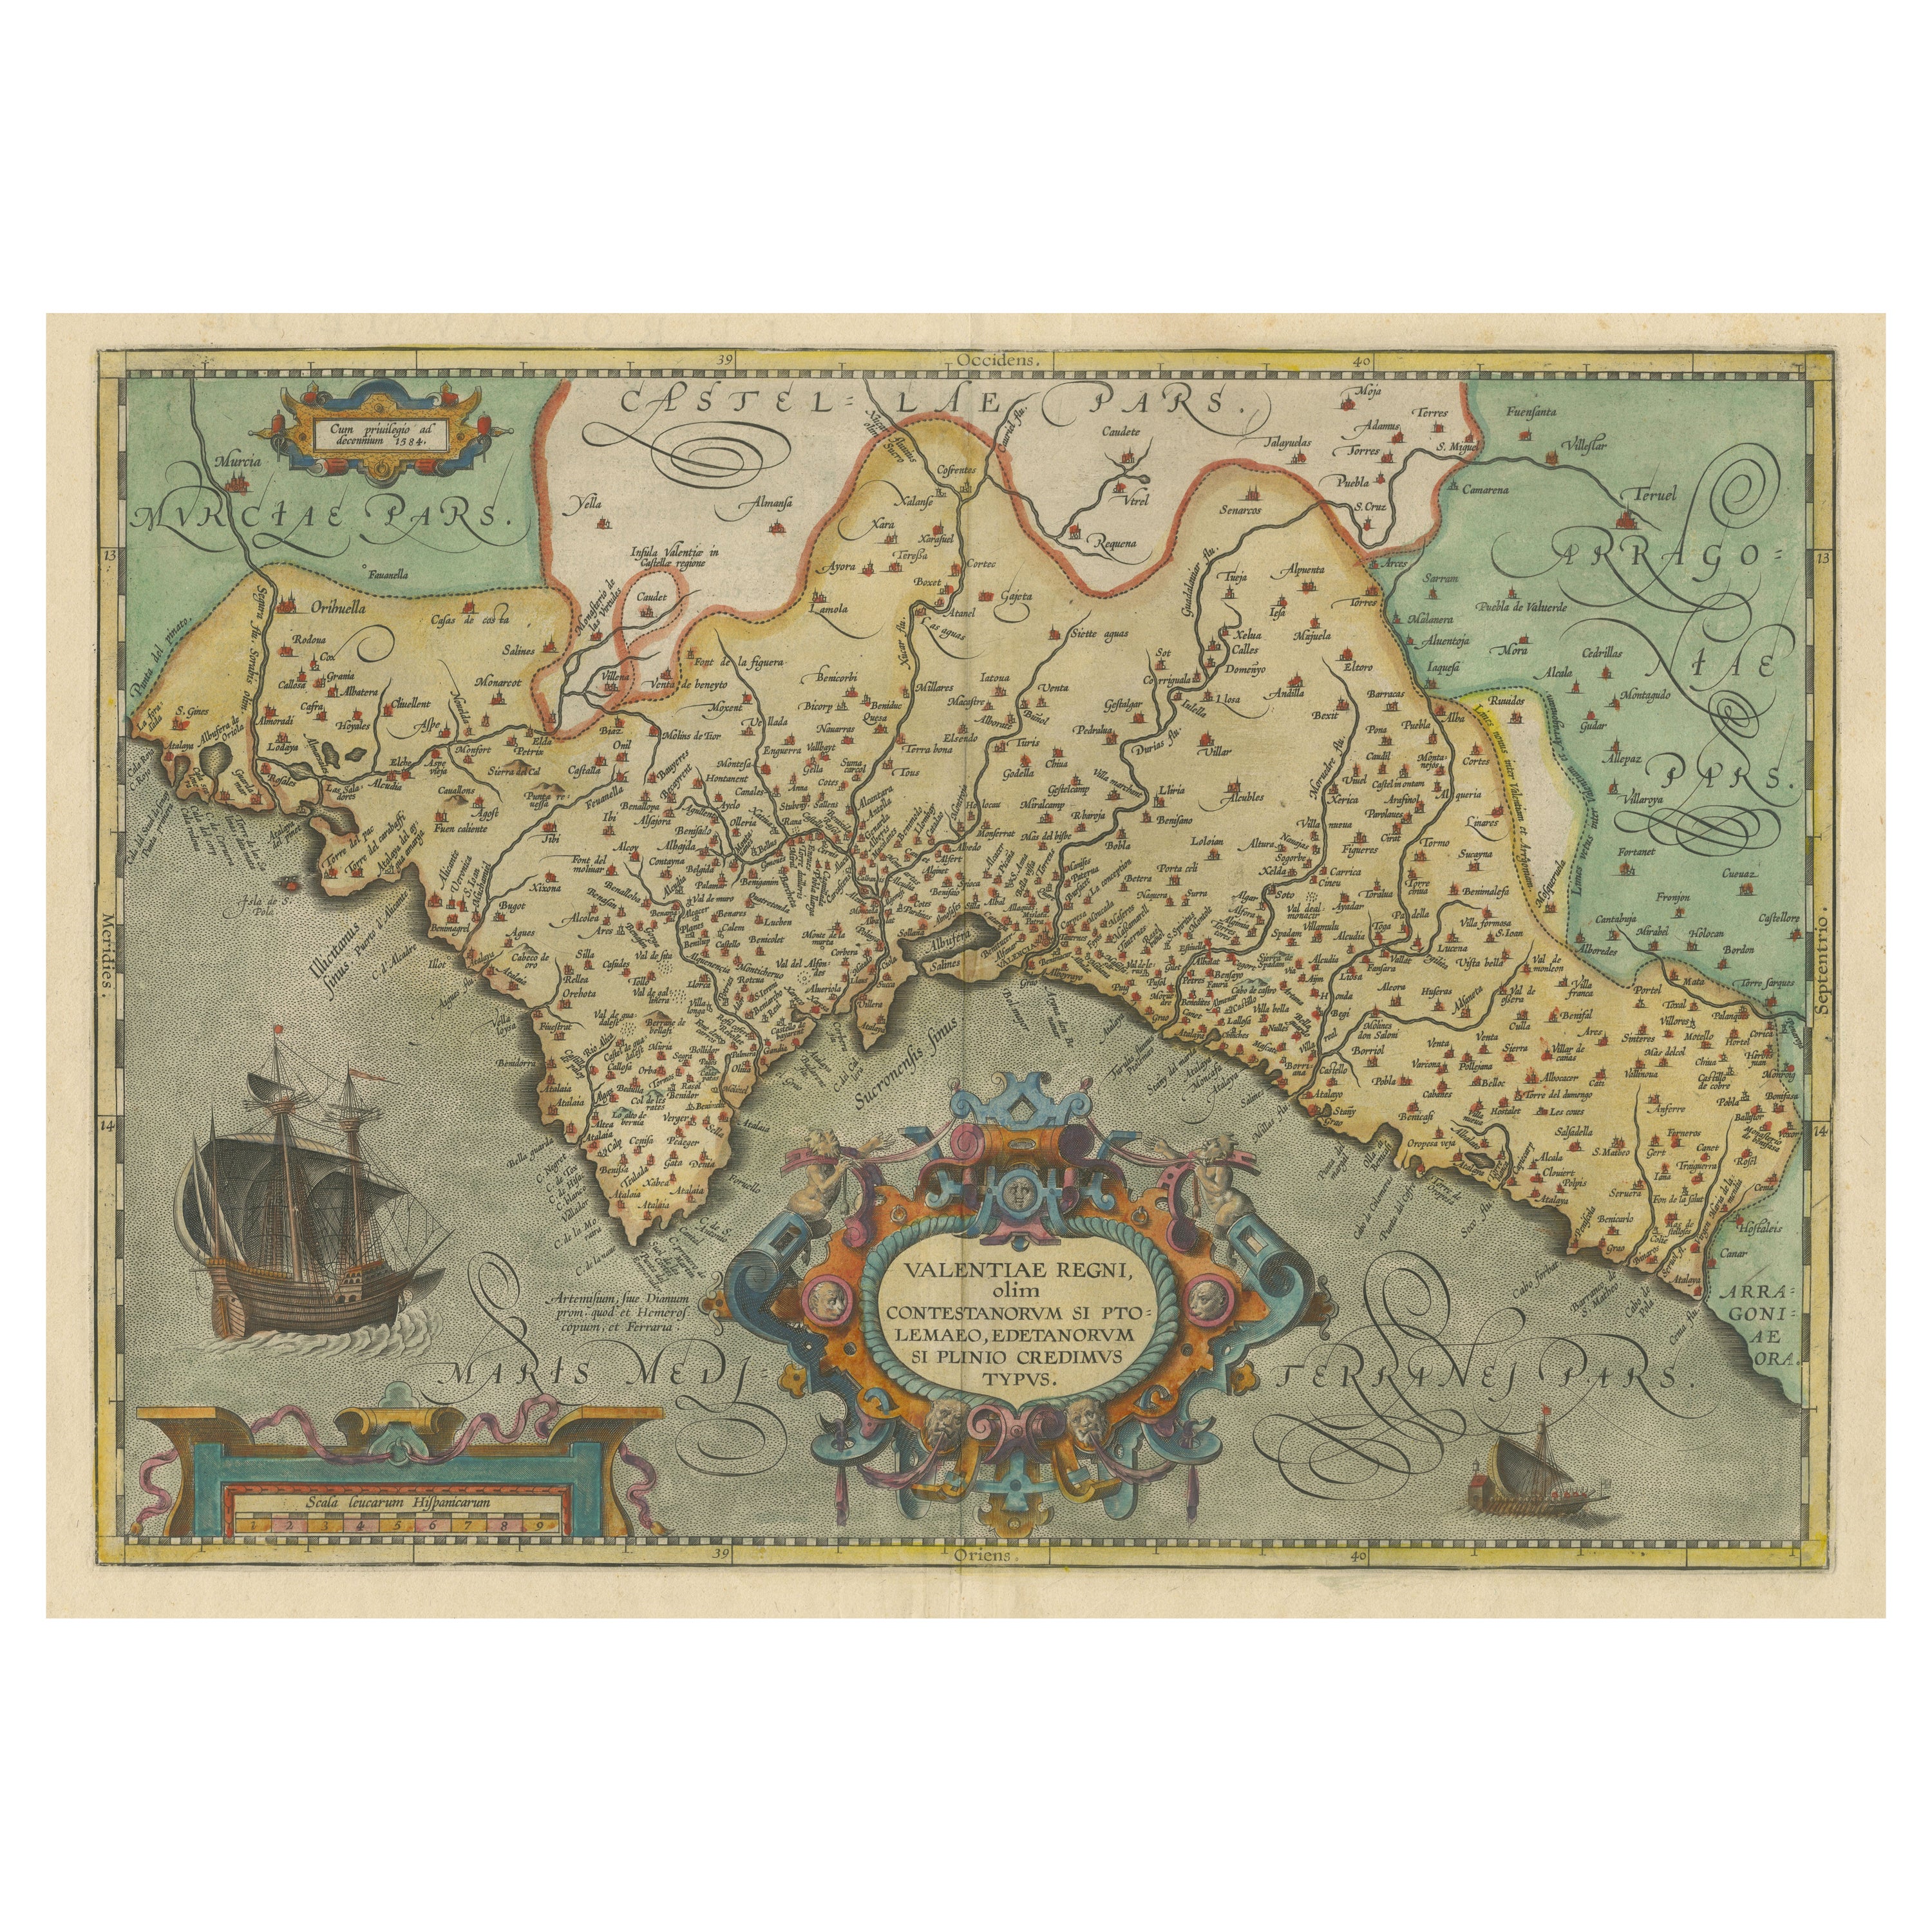 Decorative Original Antique Map of Valencia in Southern Spain, circa 1601